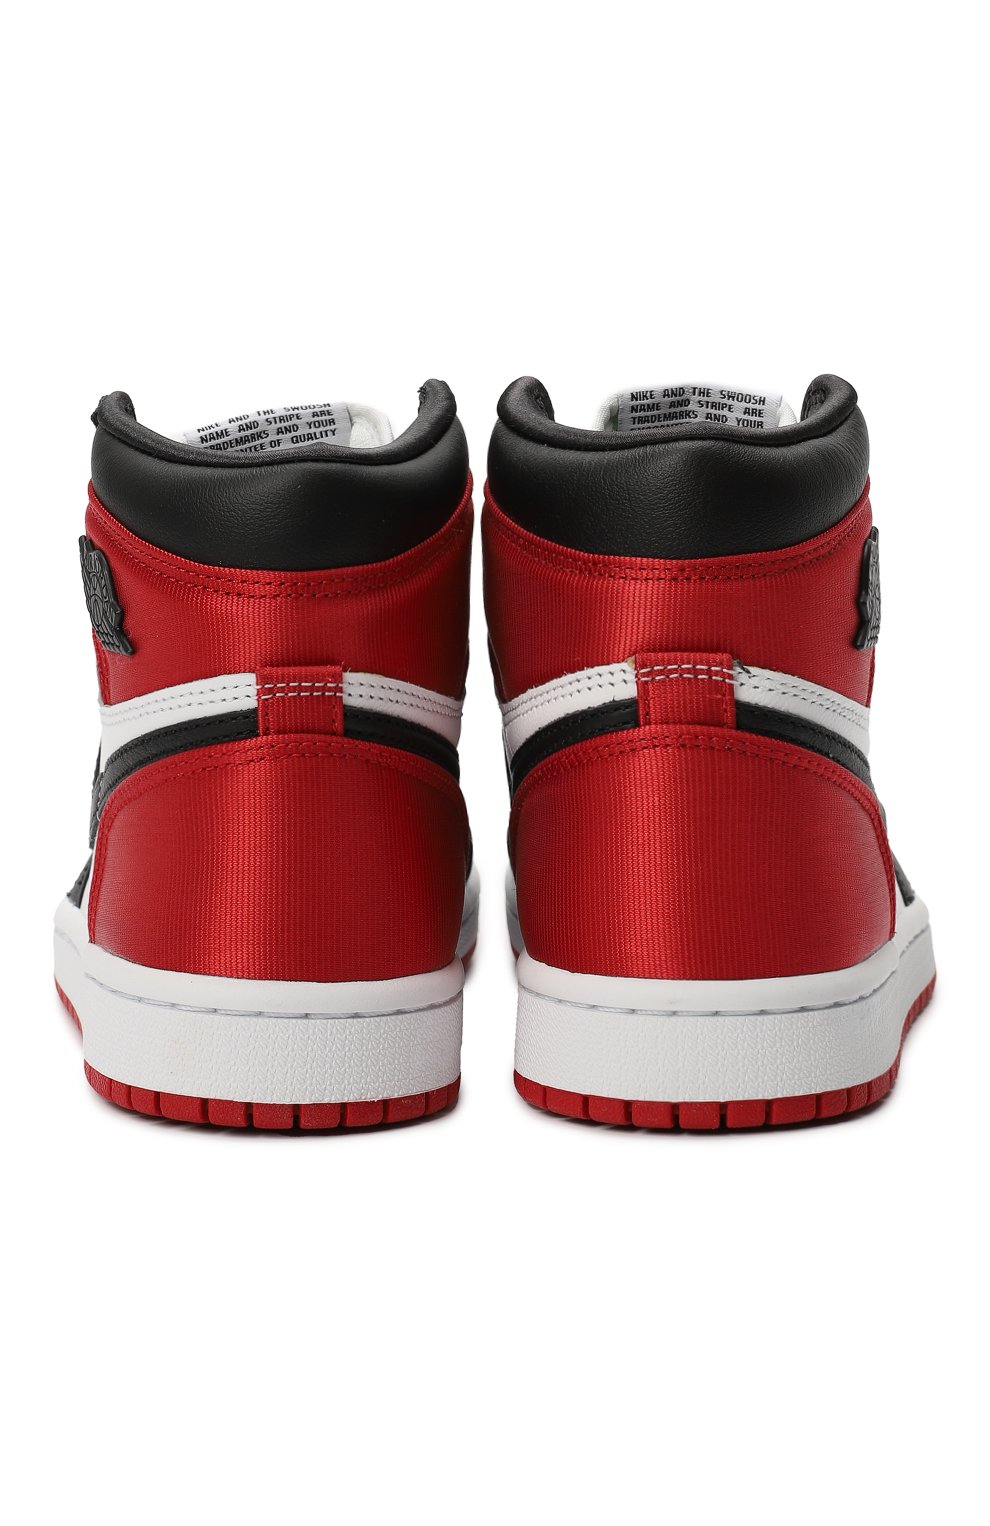 Кеды Air Jordan 1 High OG “Satin Black Toe” | Nike | Чёрно-белый - 3